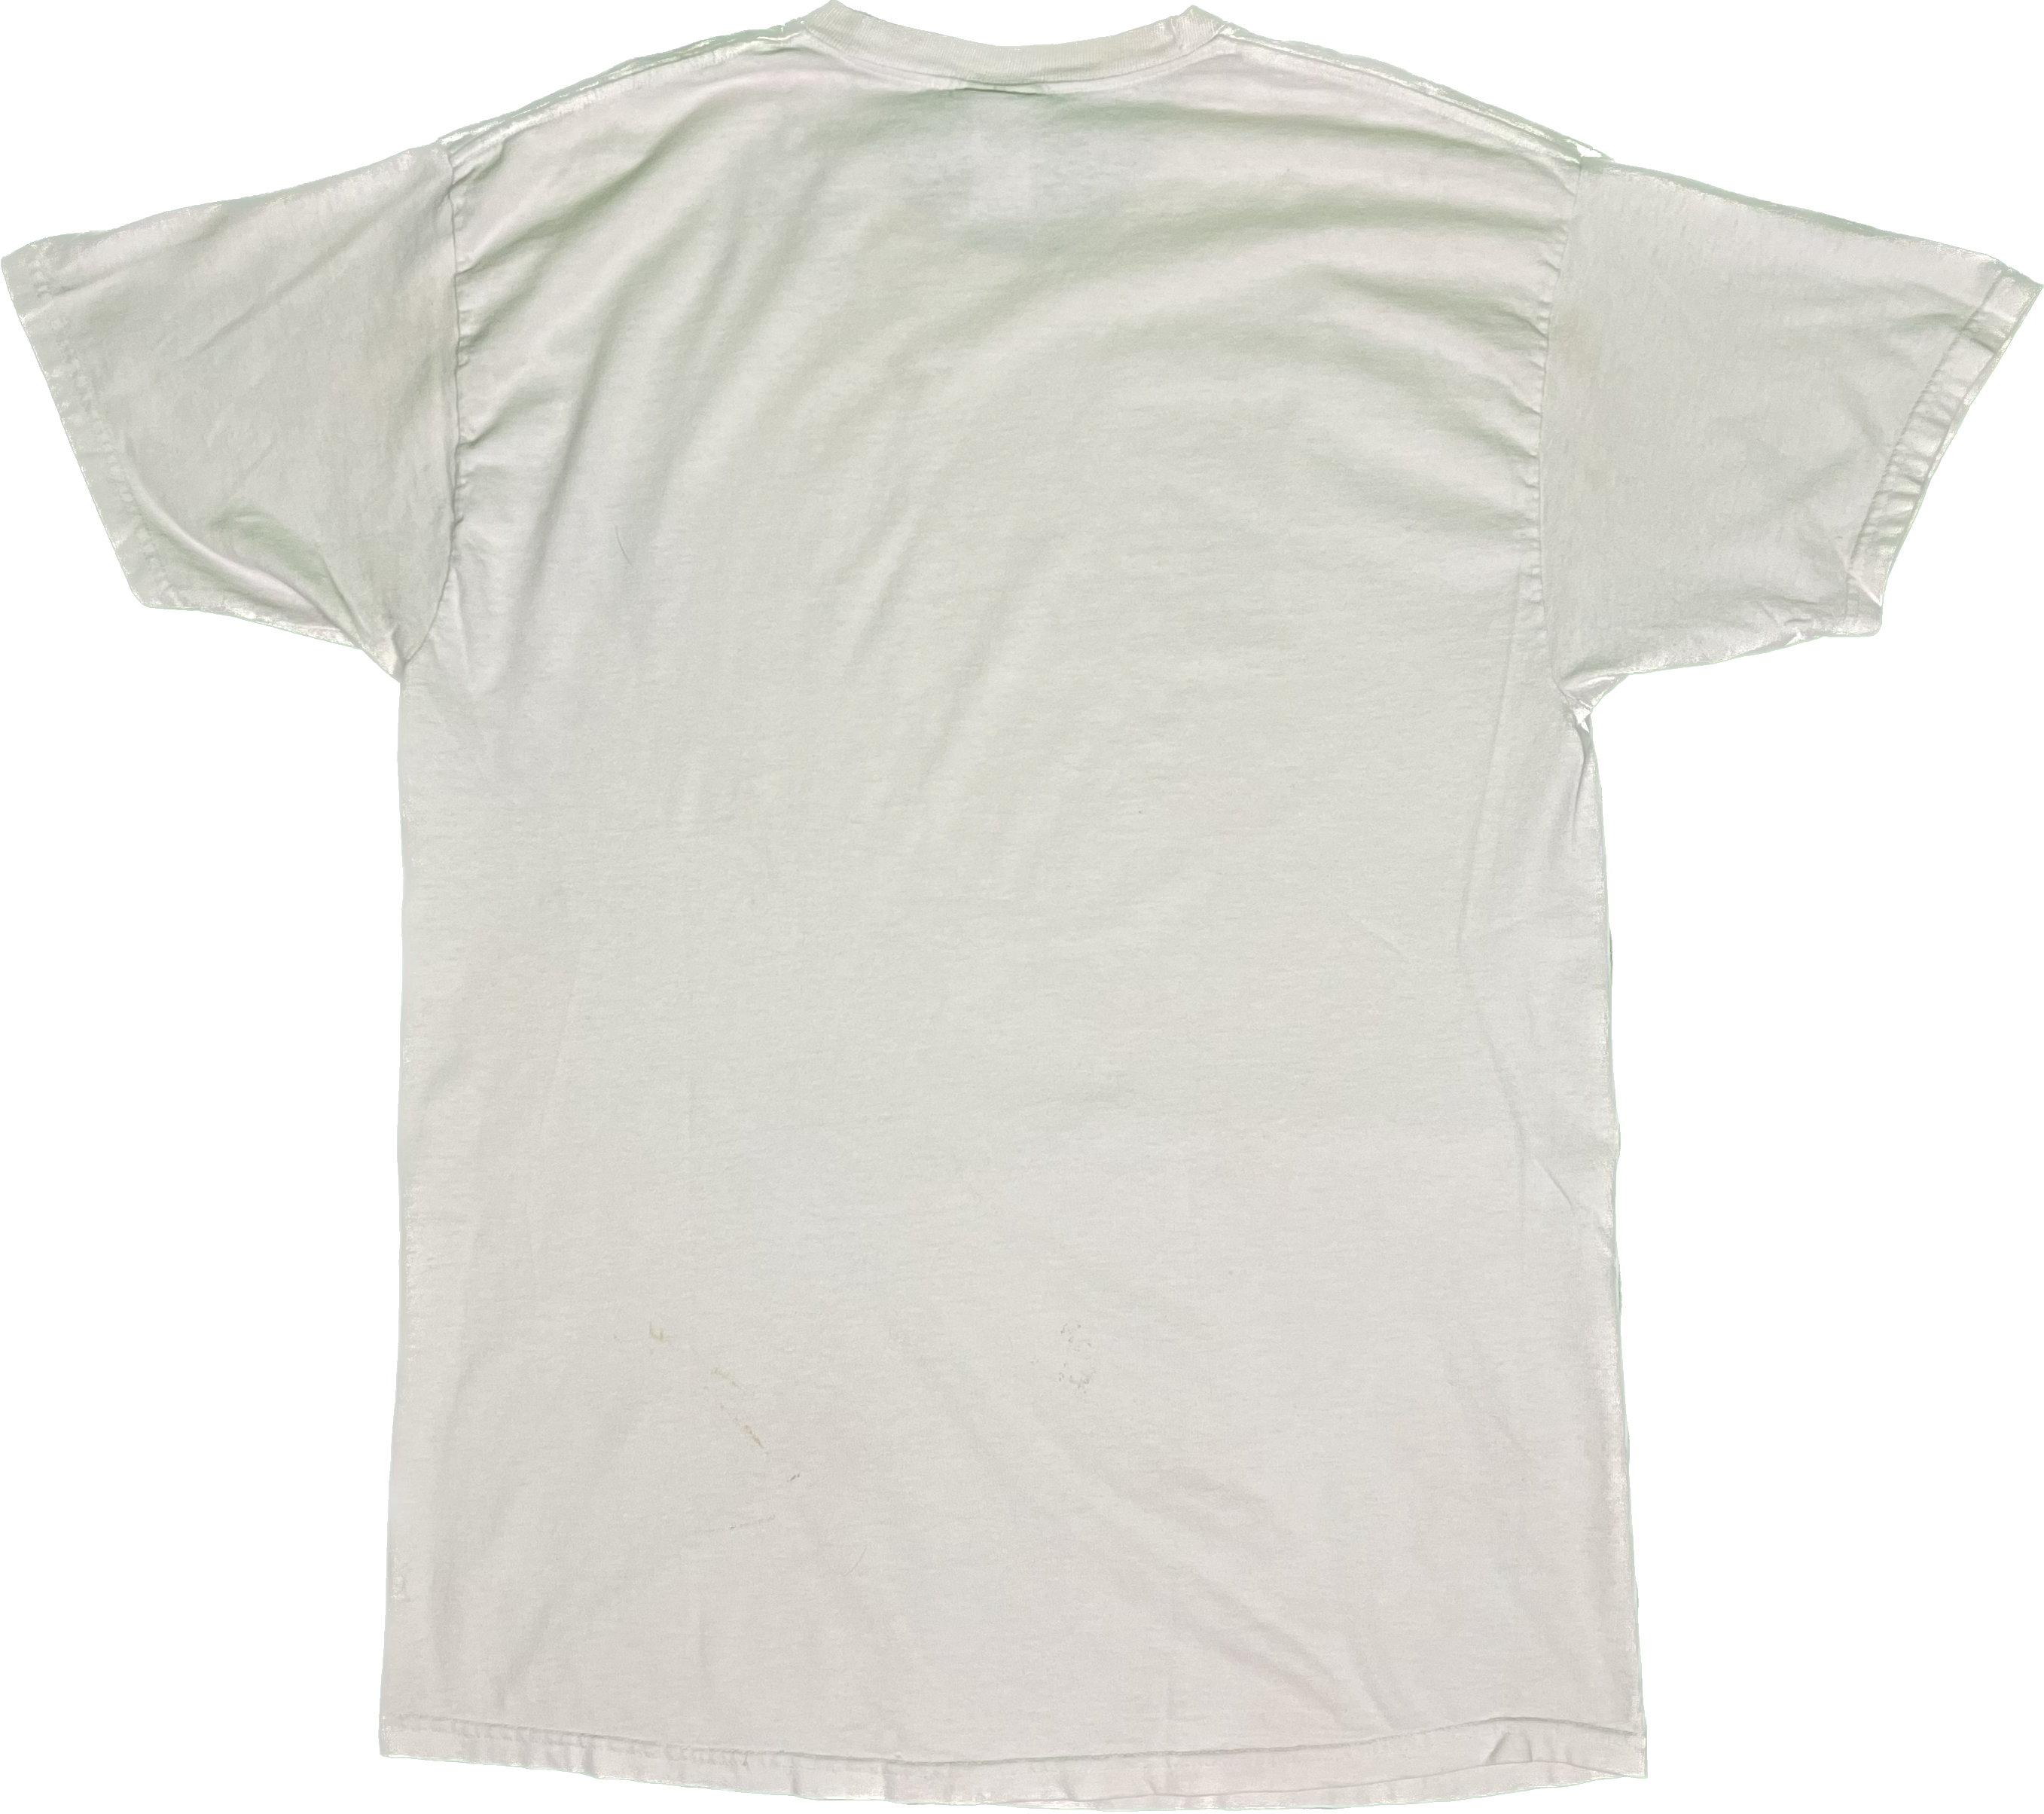 Hard Rock Cafe Miami T-Shirt